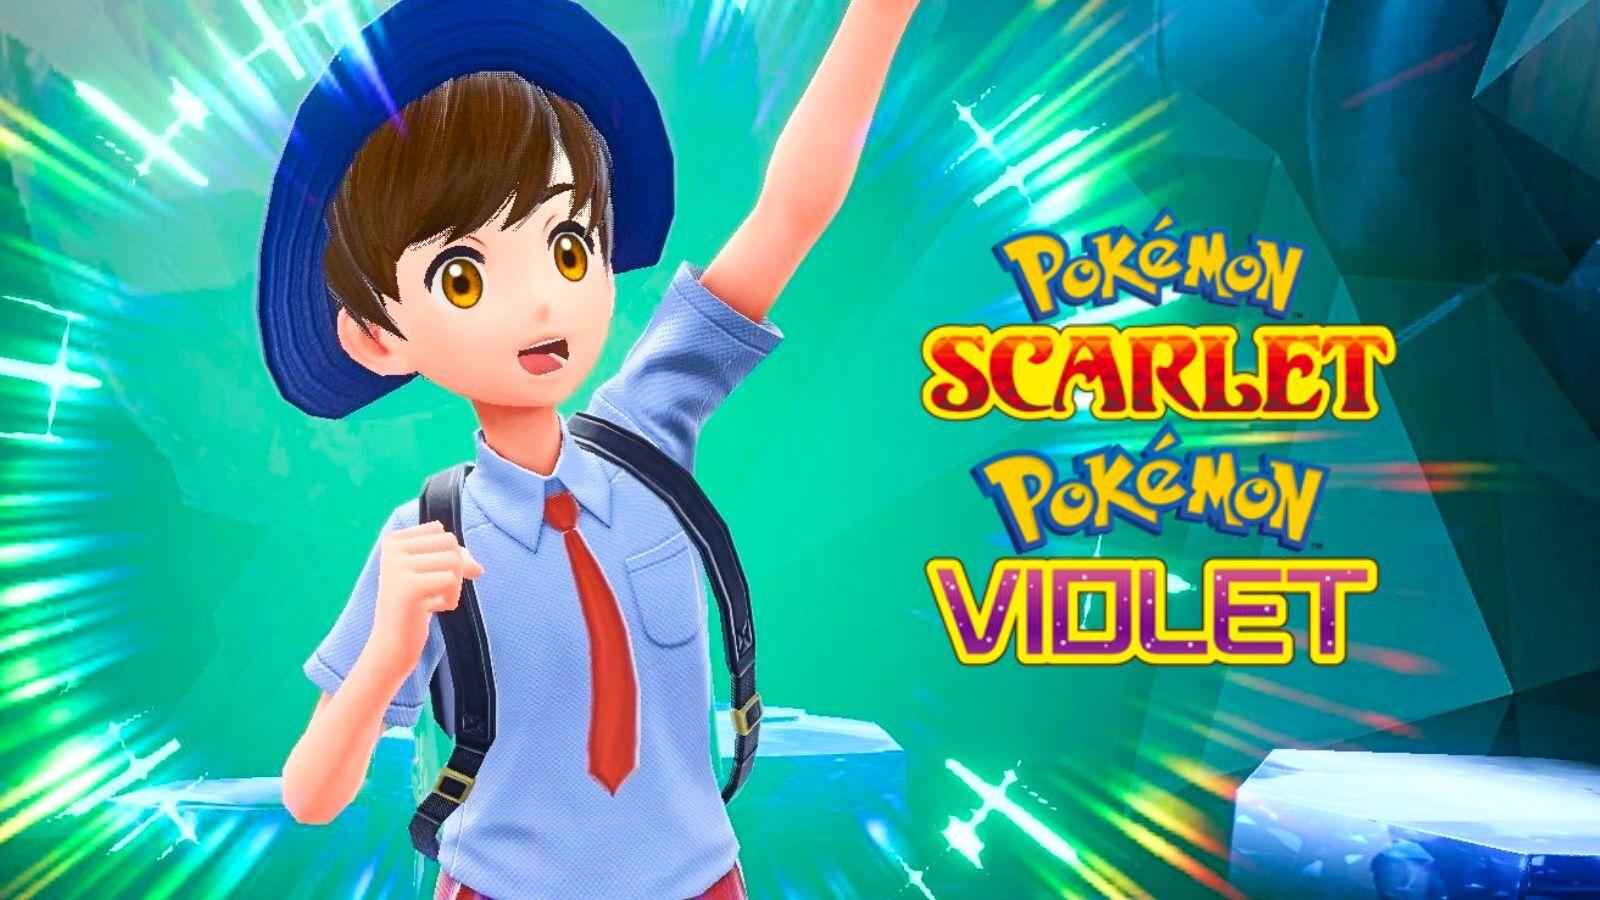 Pokemon Scarlet and Violet Pokedex Full Leak